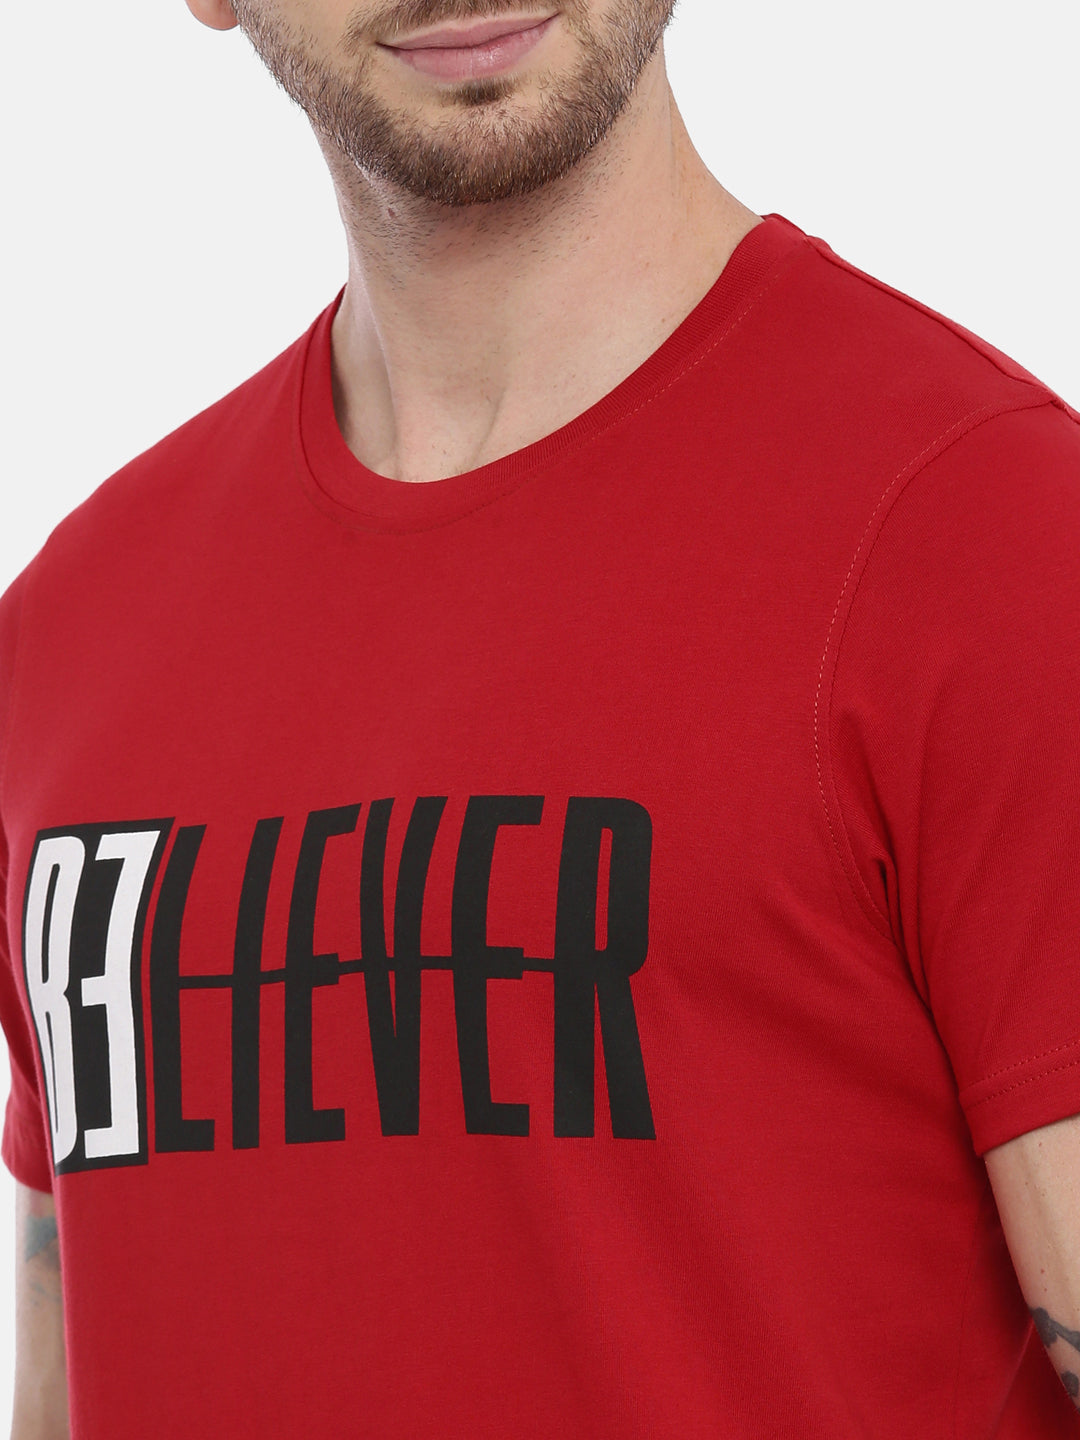 Believer T-Shirt Graphic T-Shirts Bushirt   